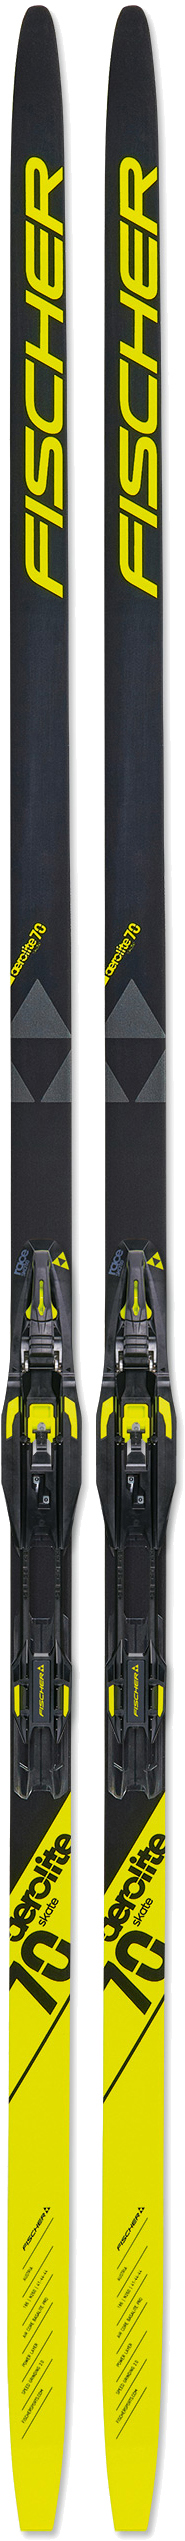 Прогулочные лыжи Fischer Aerolite-Skate-70 186 см